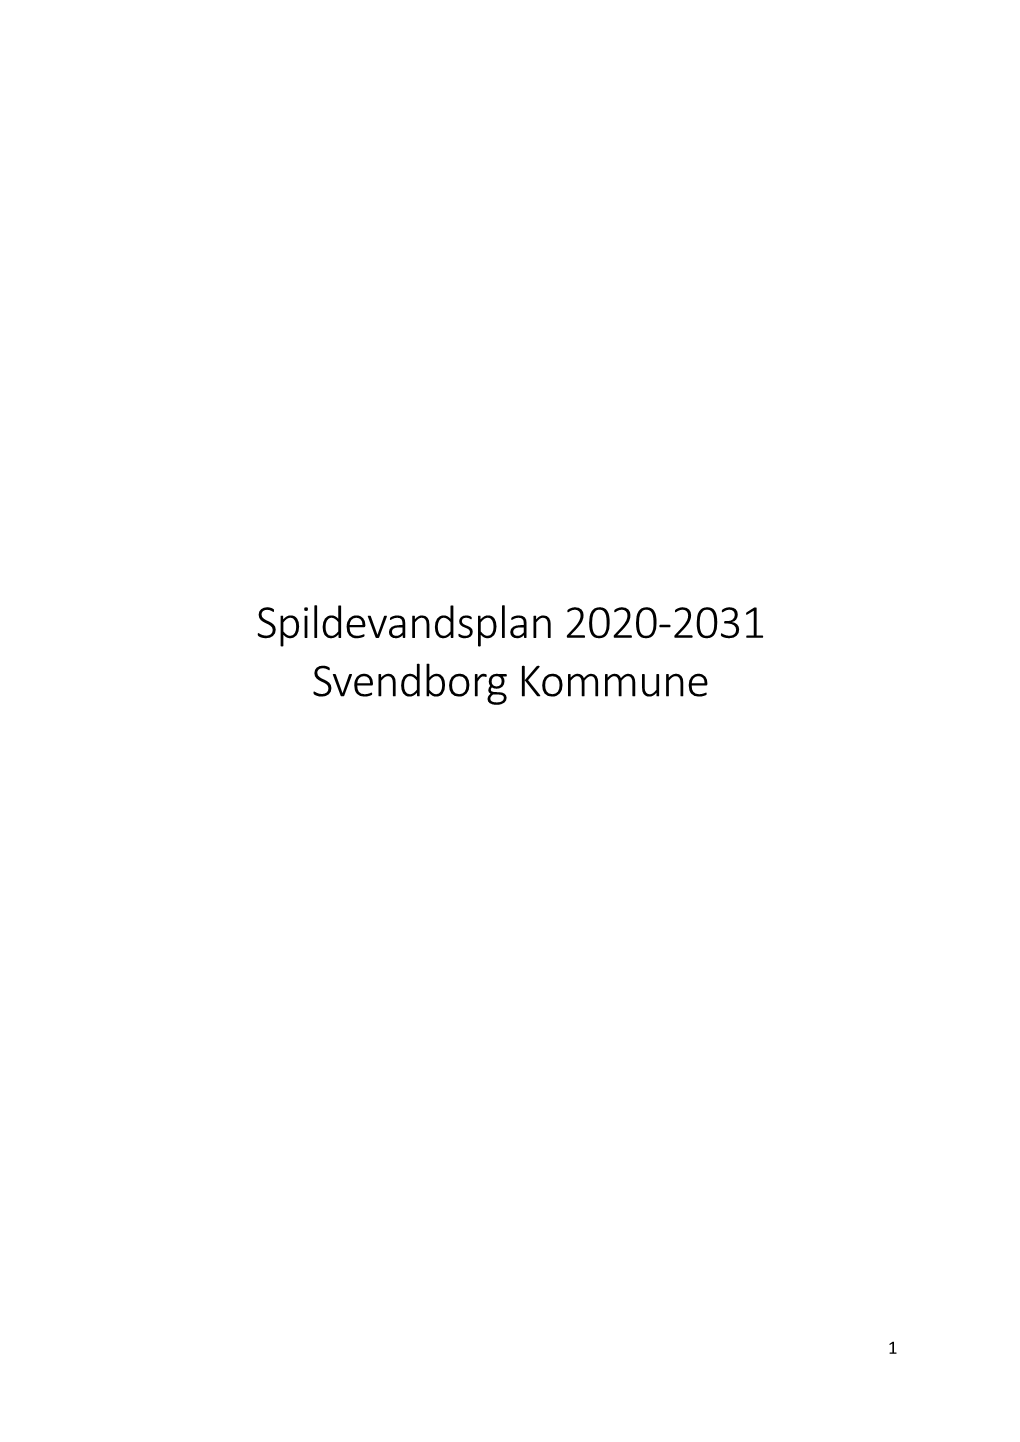 Spildevandsplan 2020-2031 Svendborg Kommune